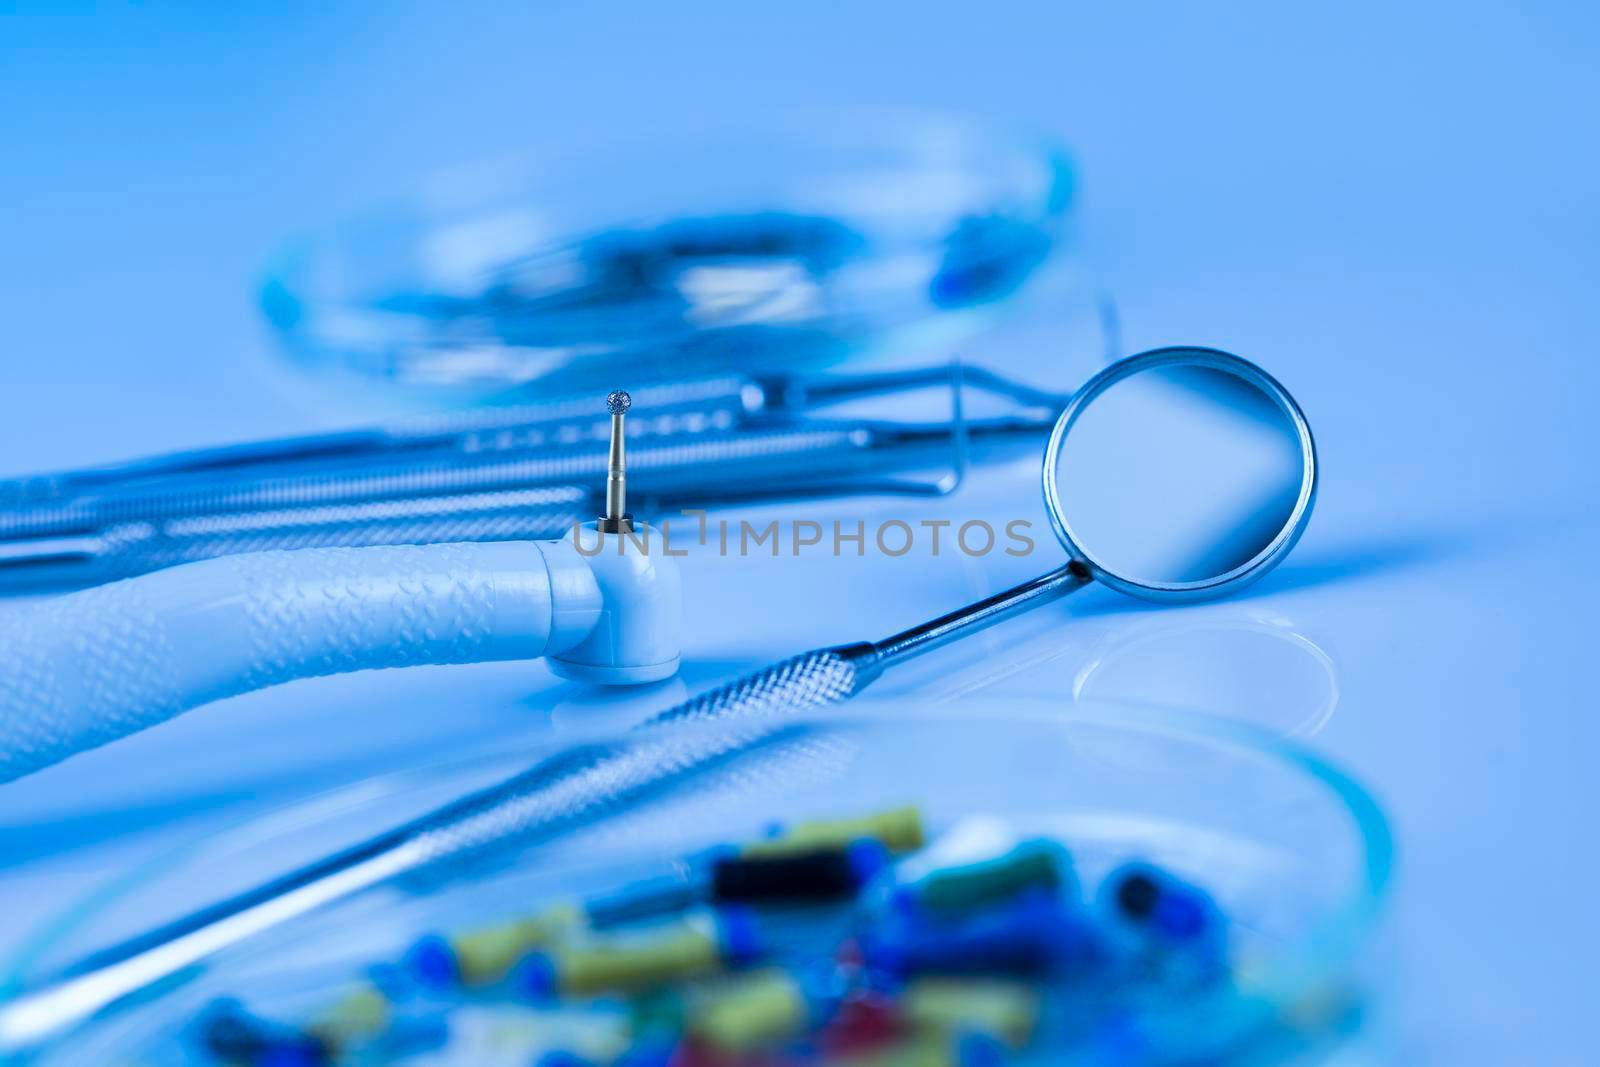 Set of metal medical equipment tools for teeth dental